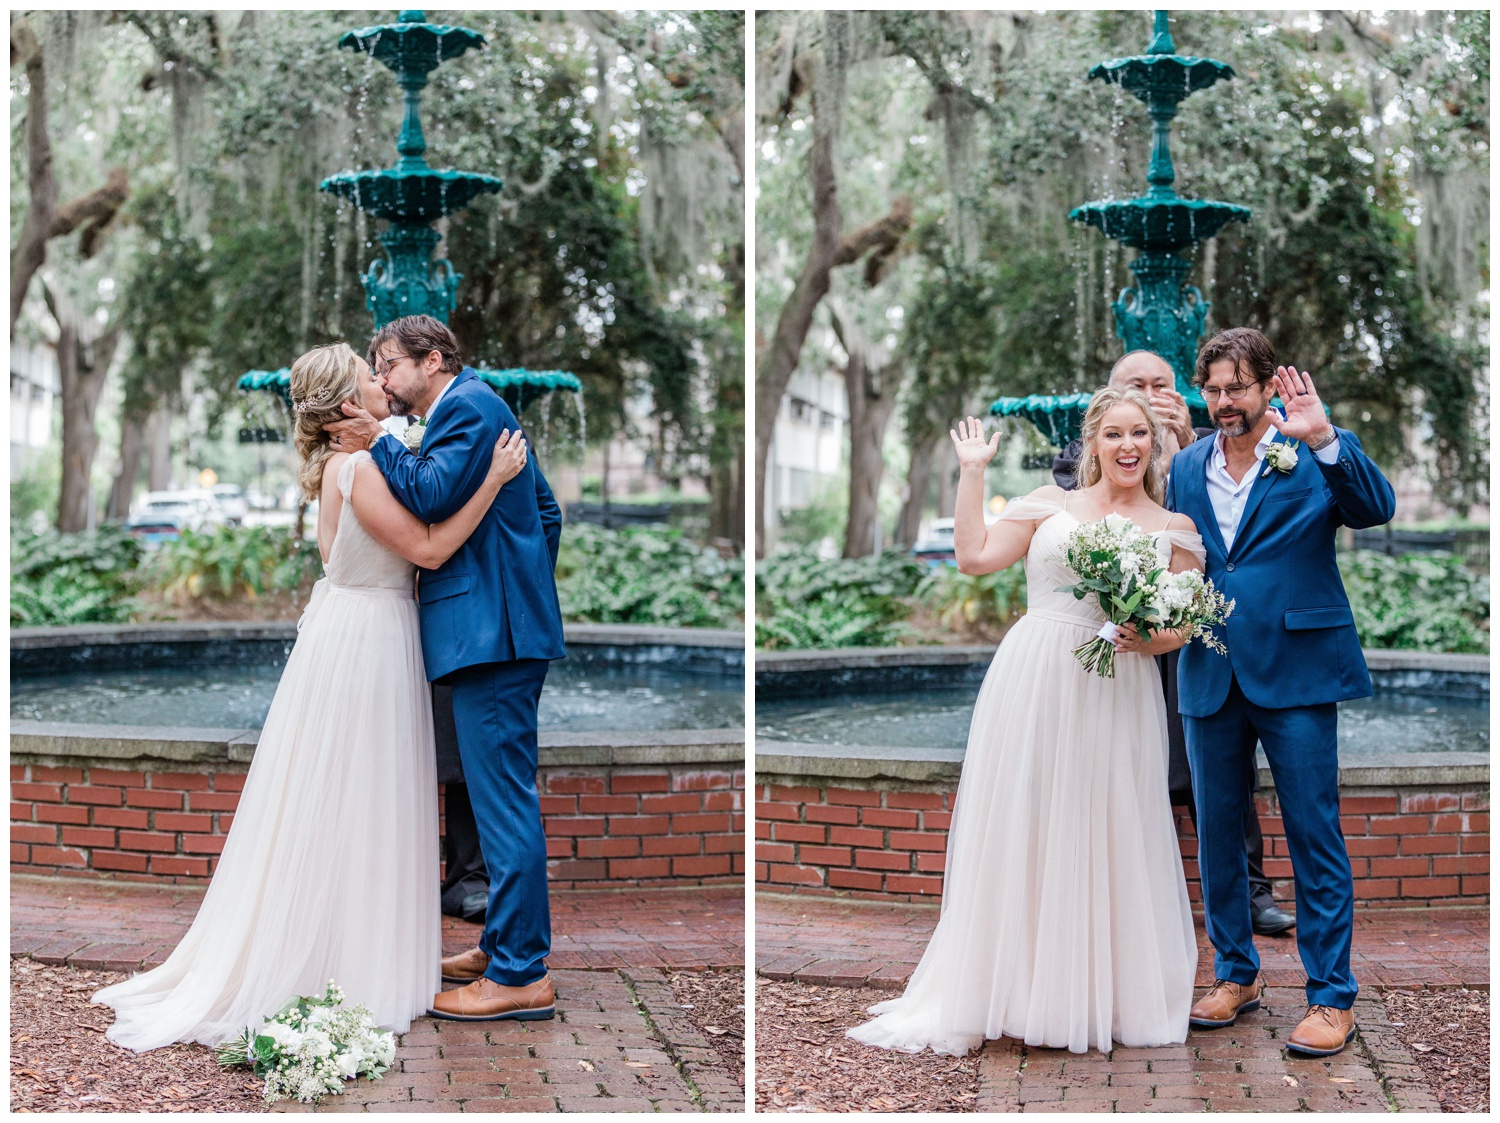 Just married - The Savannah Elopement Package